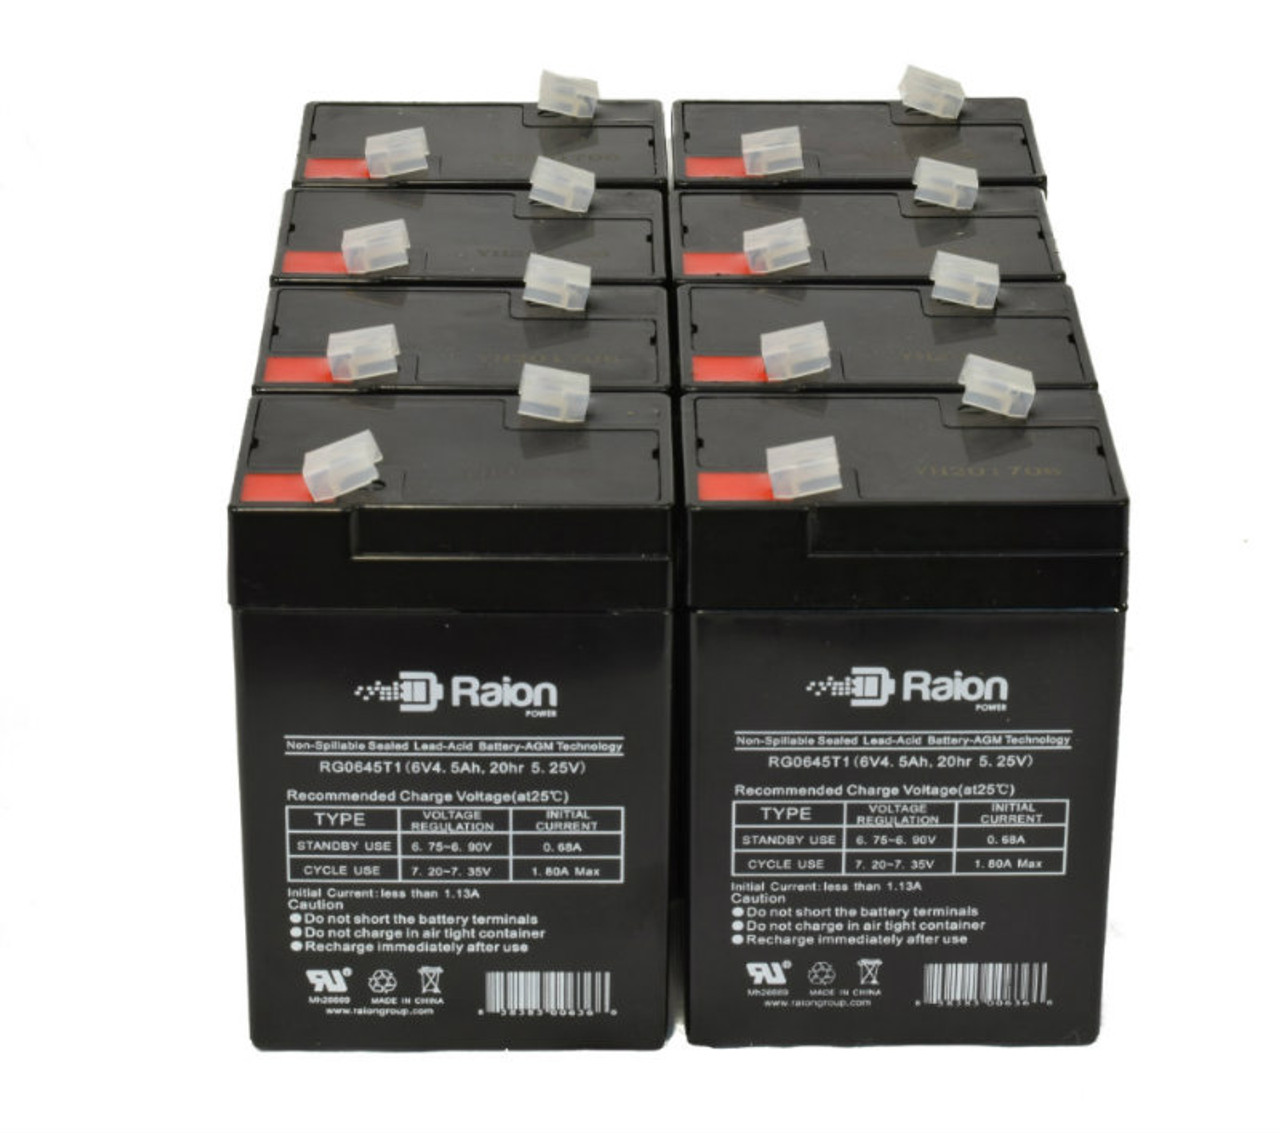 Raion Power 6V 4.5Ah Replacement Emergency Light Battery for Tork 420 - 8 Pack